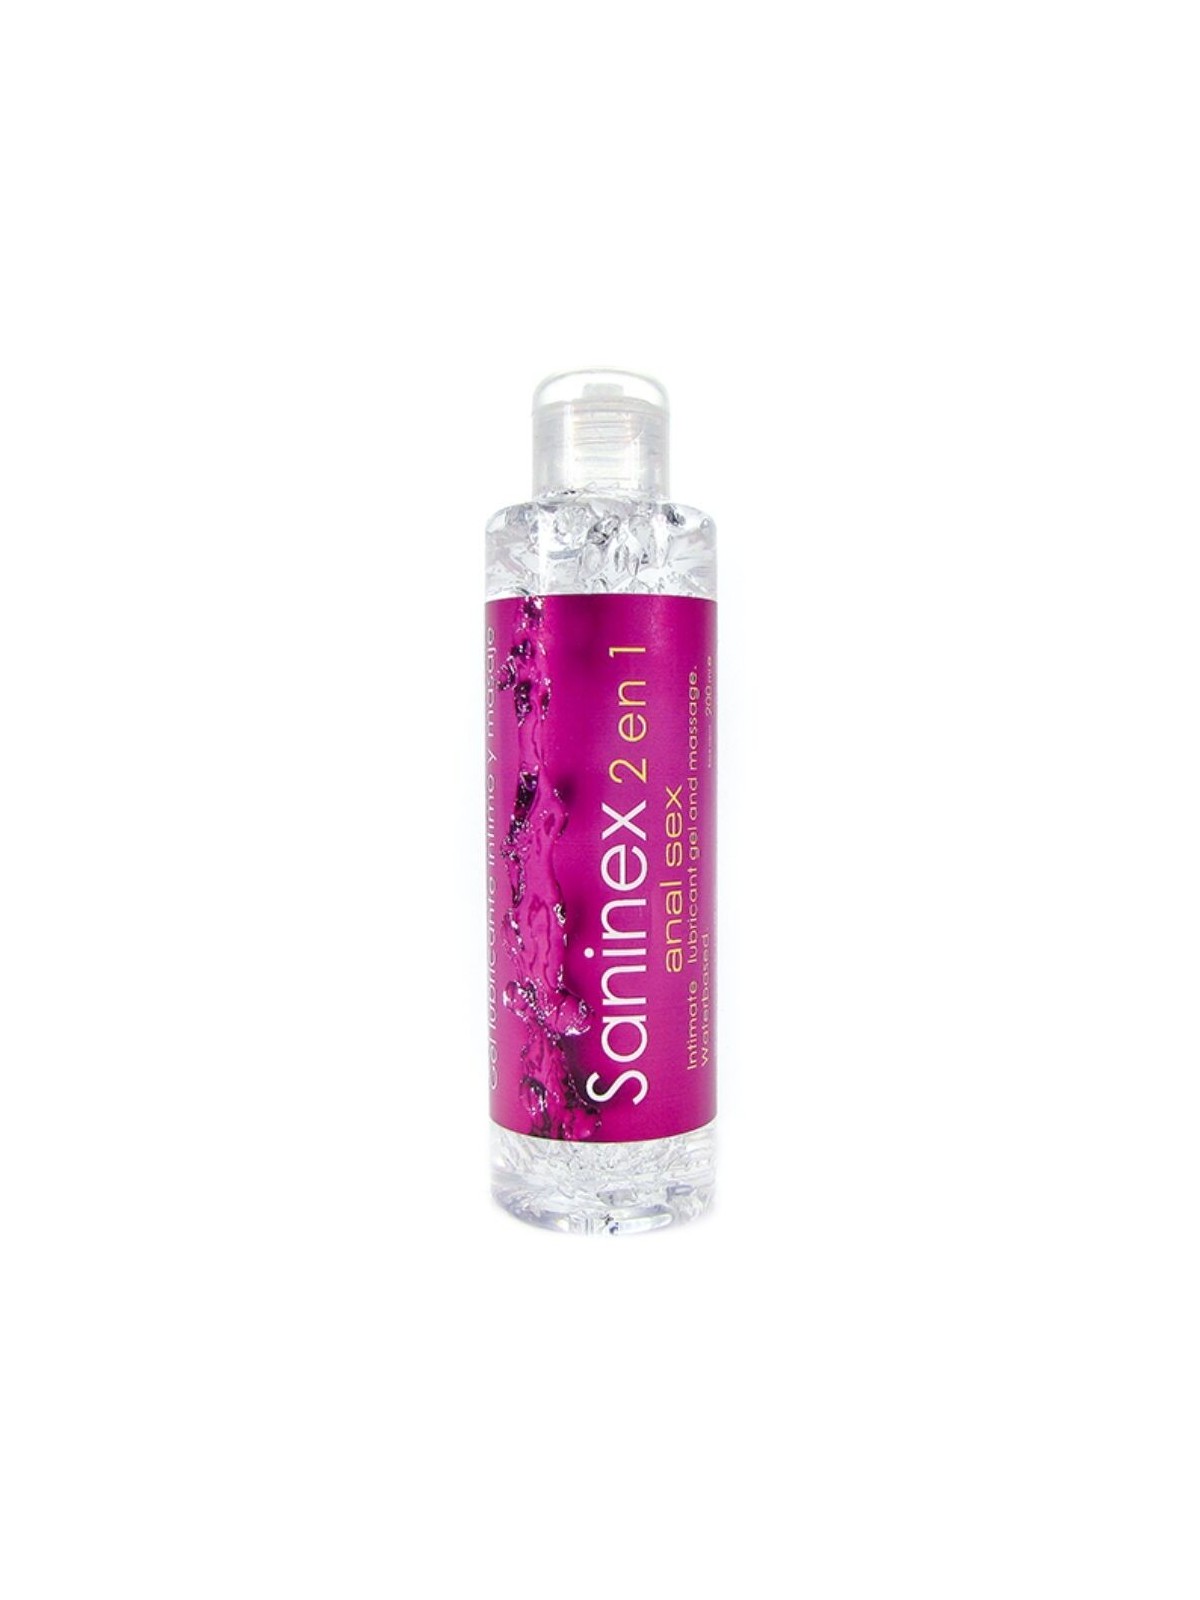 Saninex Lubricante Base Agua Anal 200 ml - Comprar Lubricante anal Saninex - Lubricantes extra deslizantes (1)